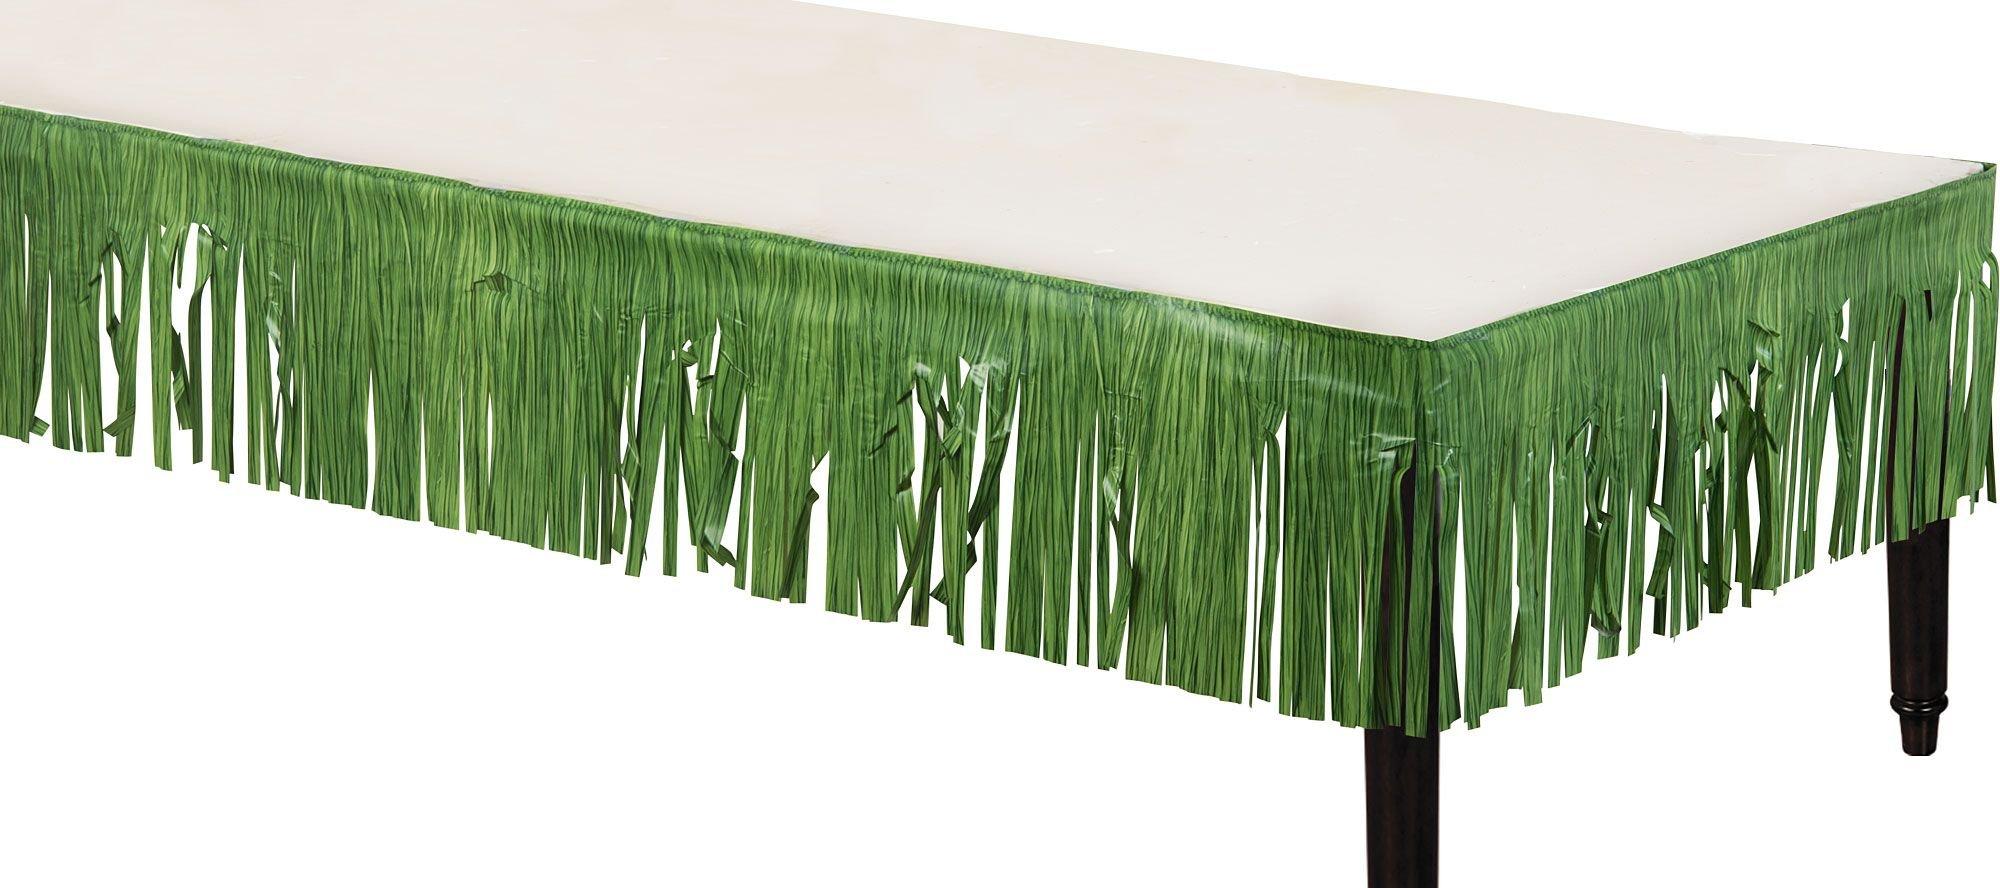 Green Faux Grass Plastic Fringe Table Skirt, 50ft x 10in